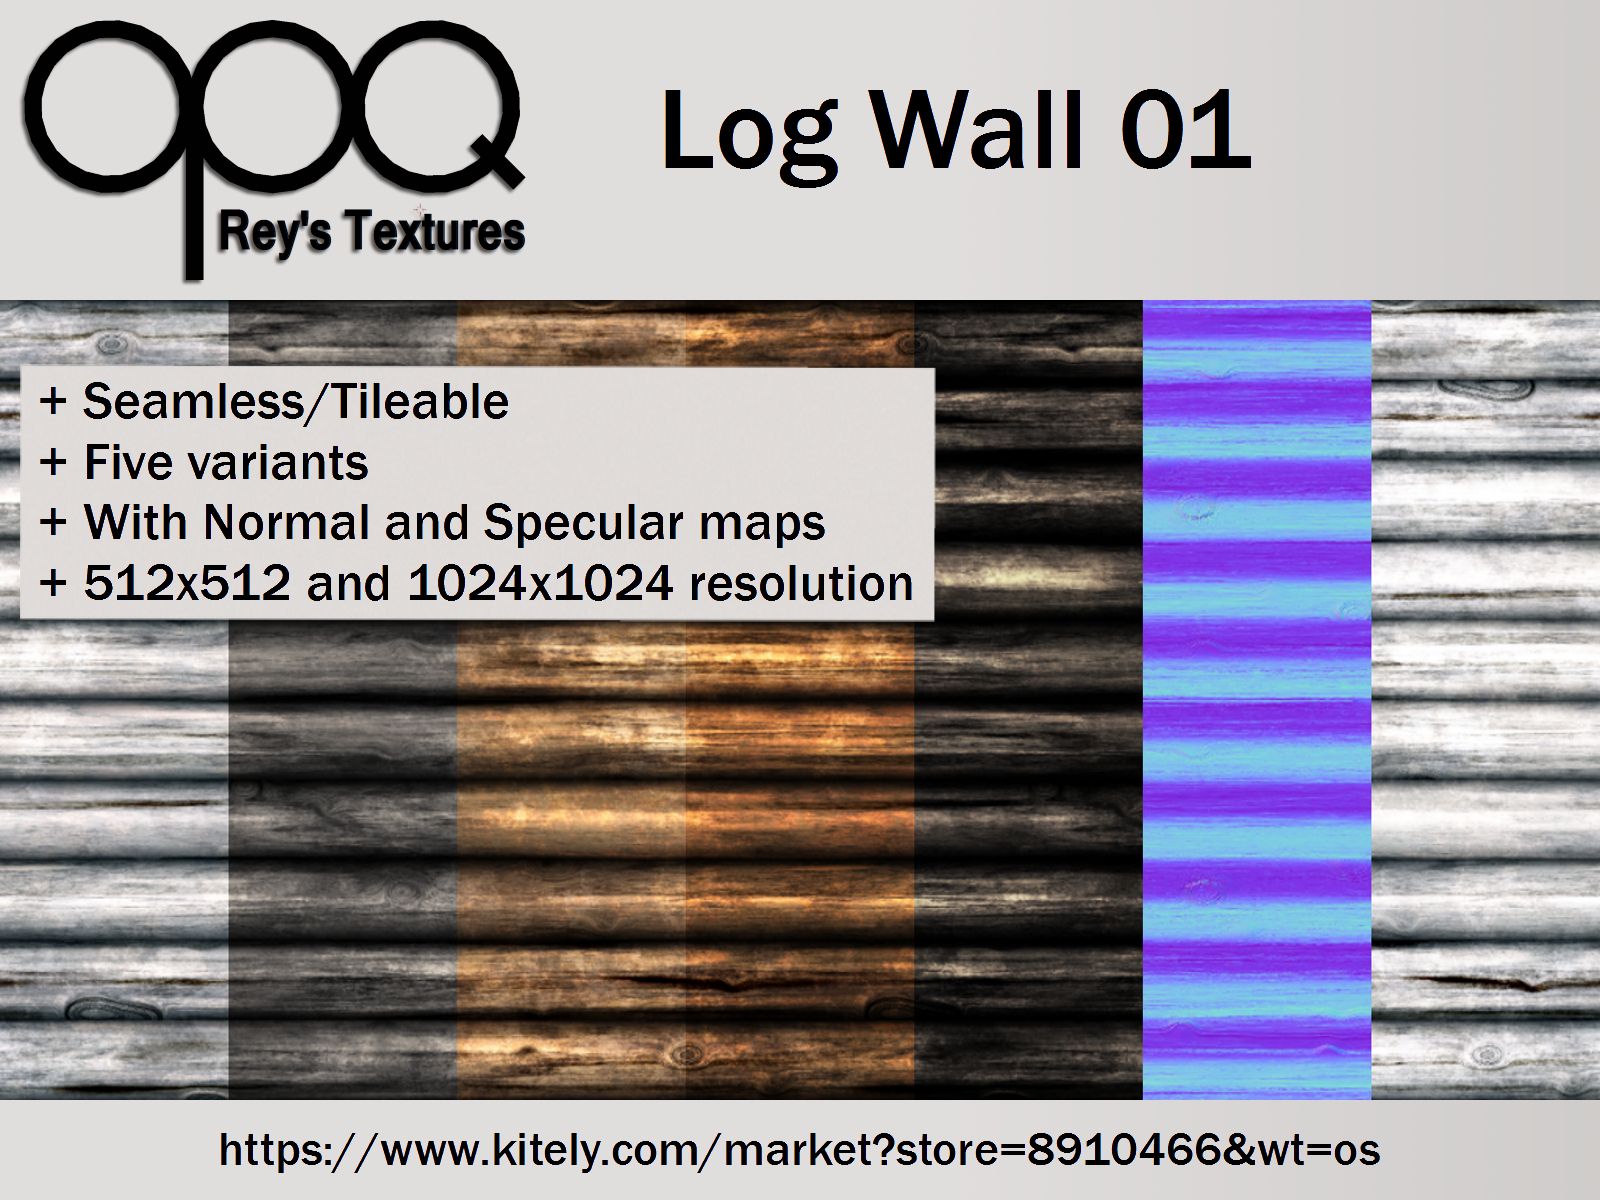 Rey's Log Wall 01 Poster Kitely.jpg